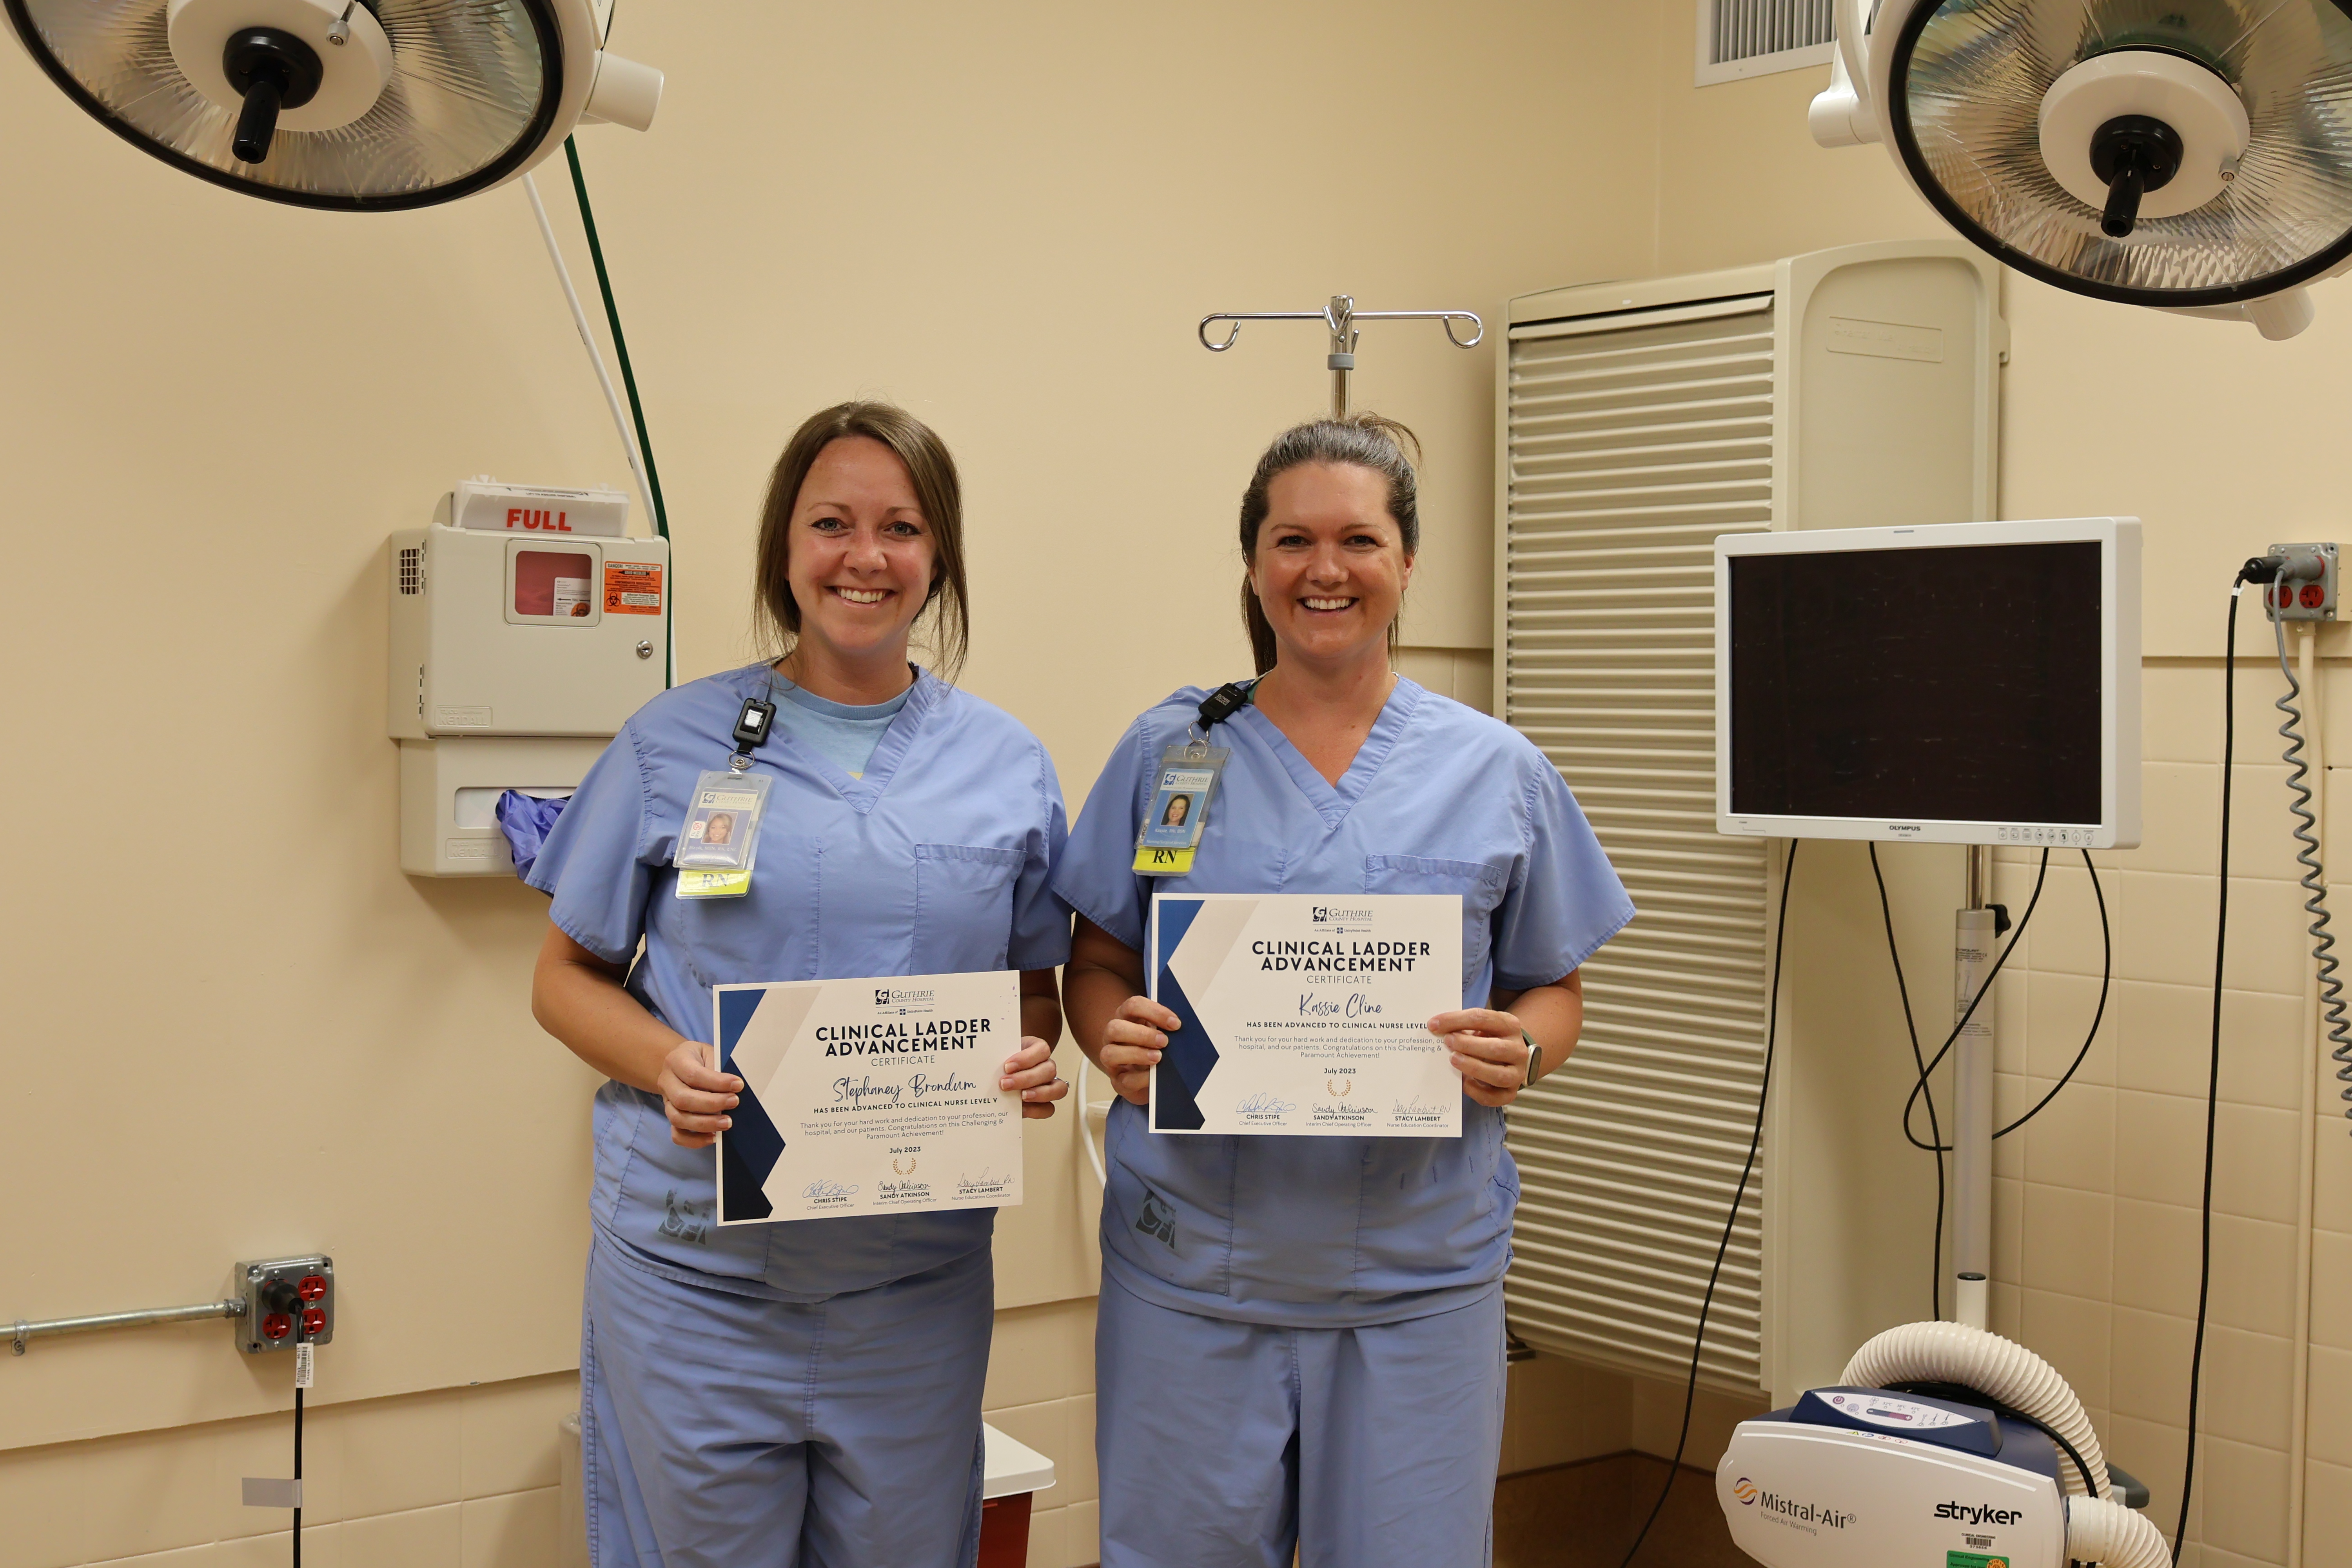 Two Nurses Advance in Nursing Clinical Ladder Program